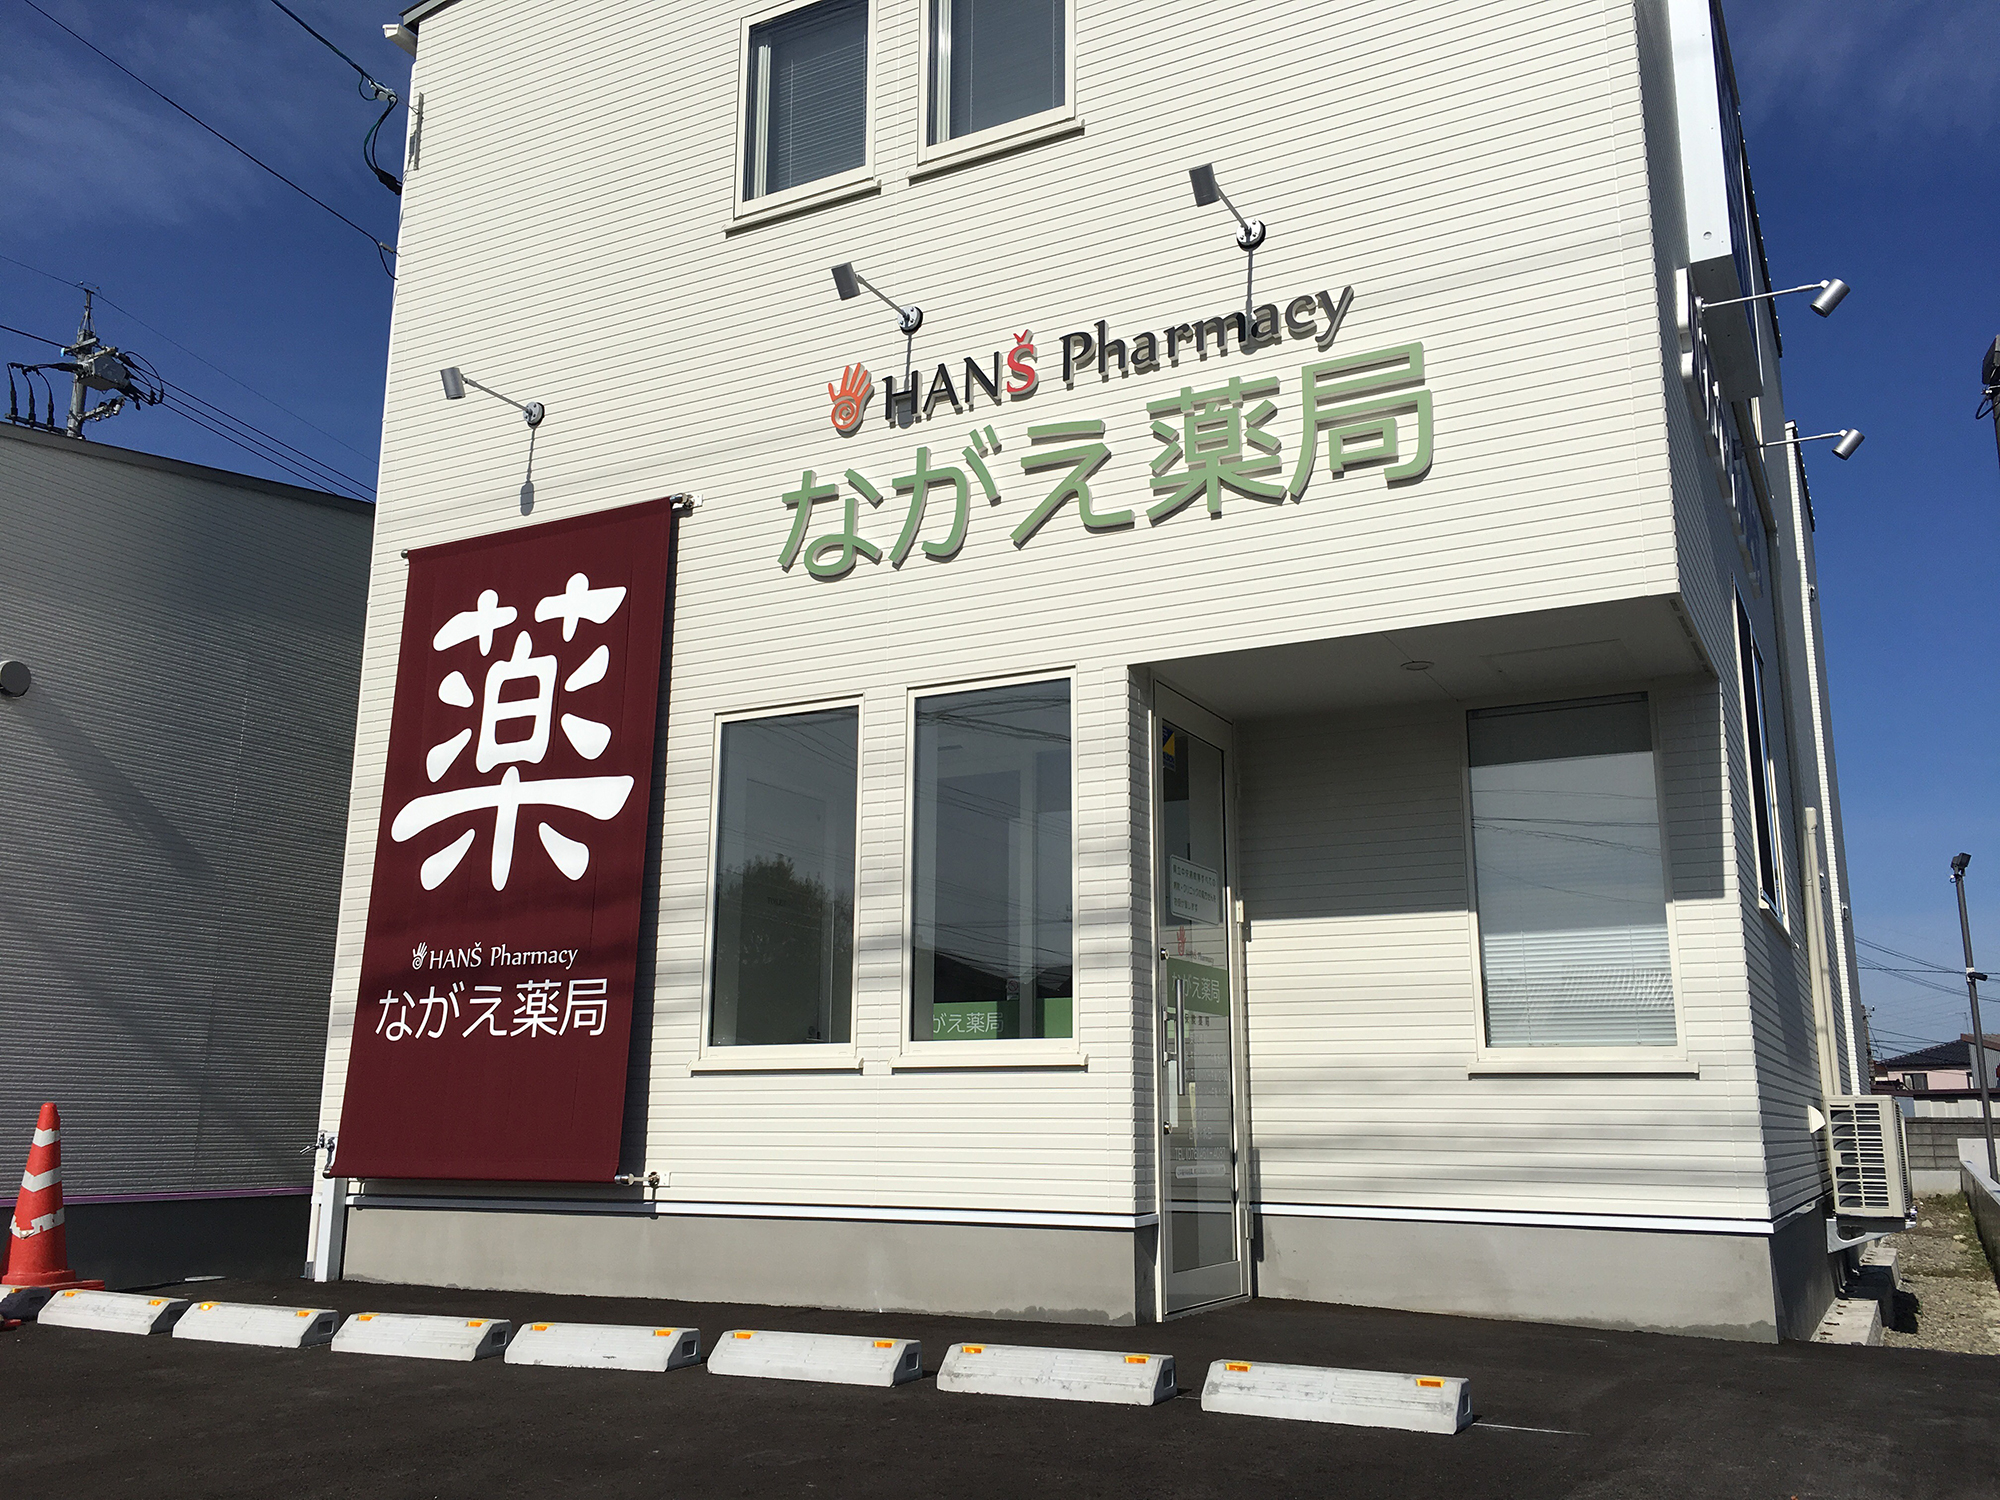 HANS Pharmacy